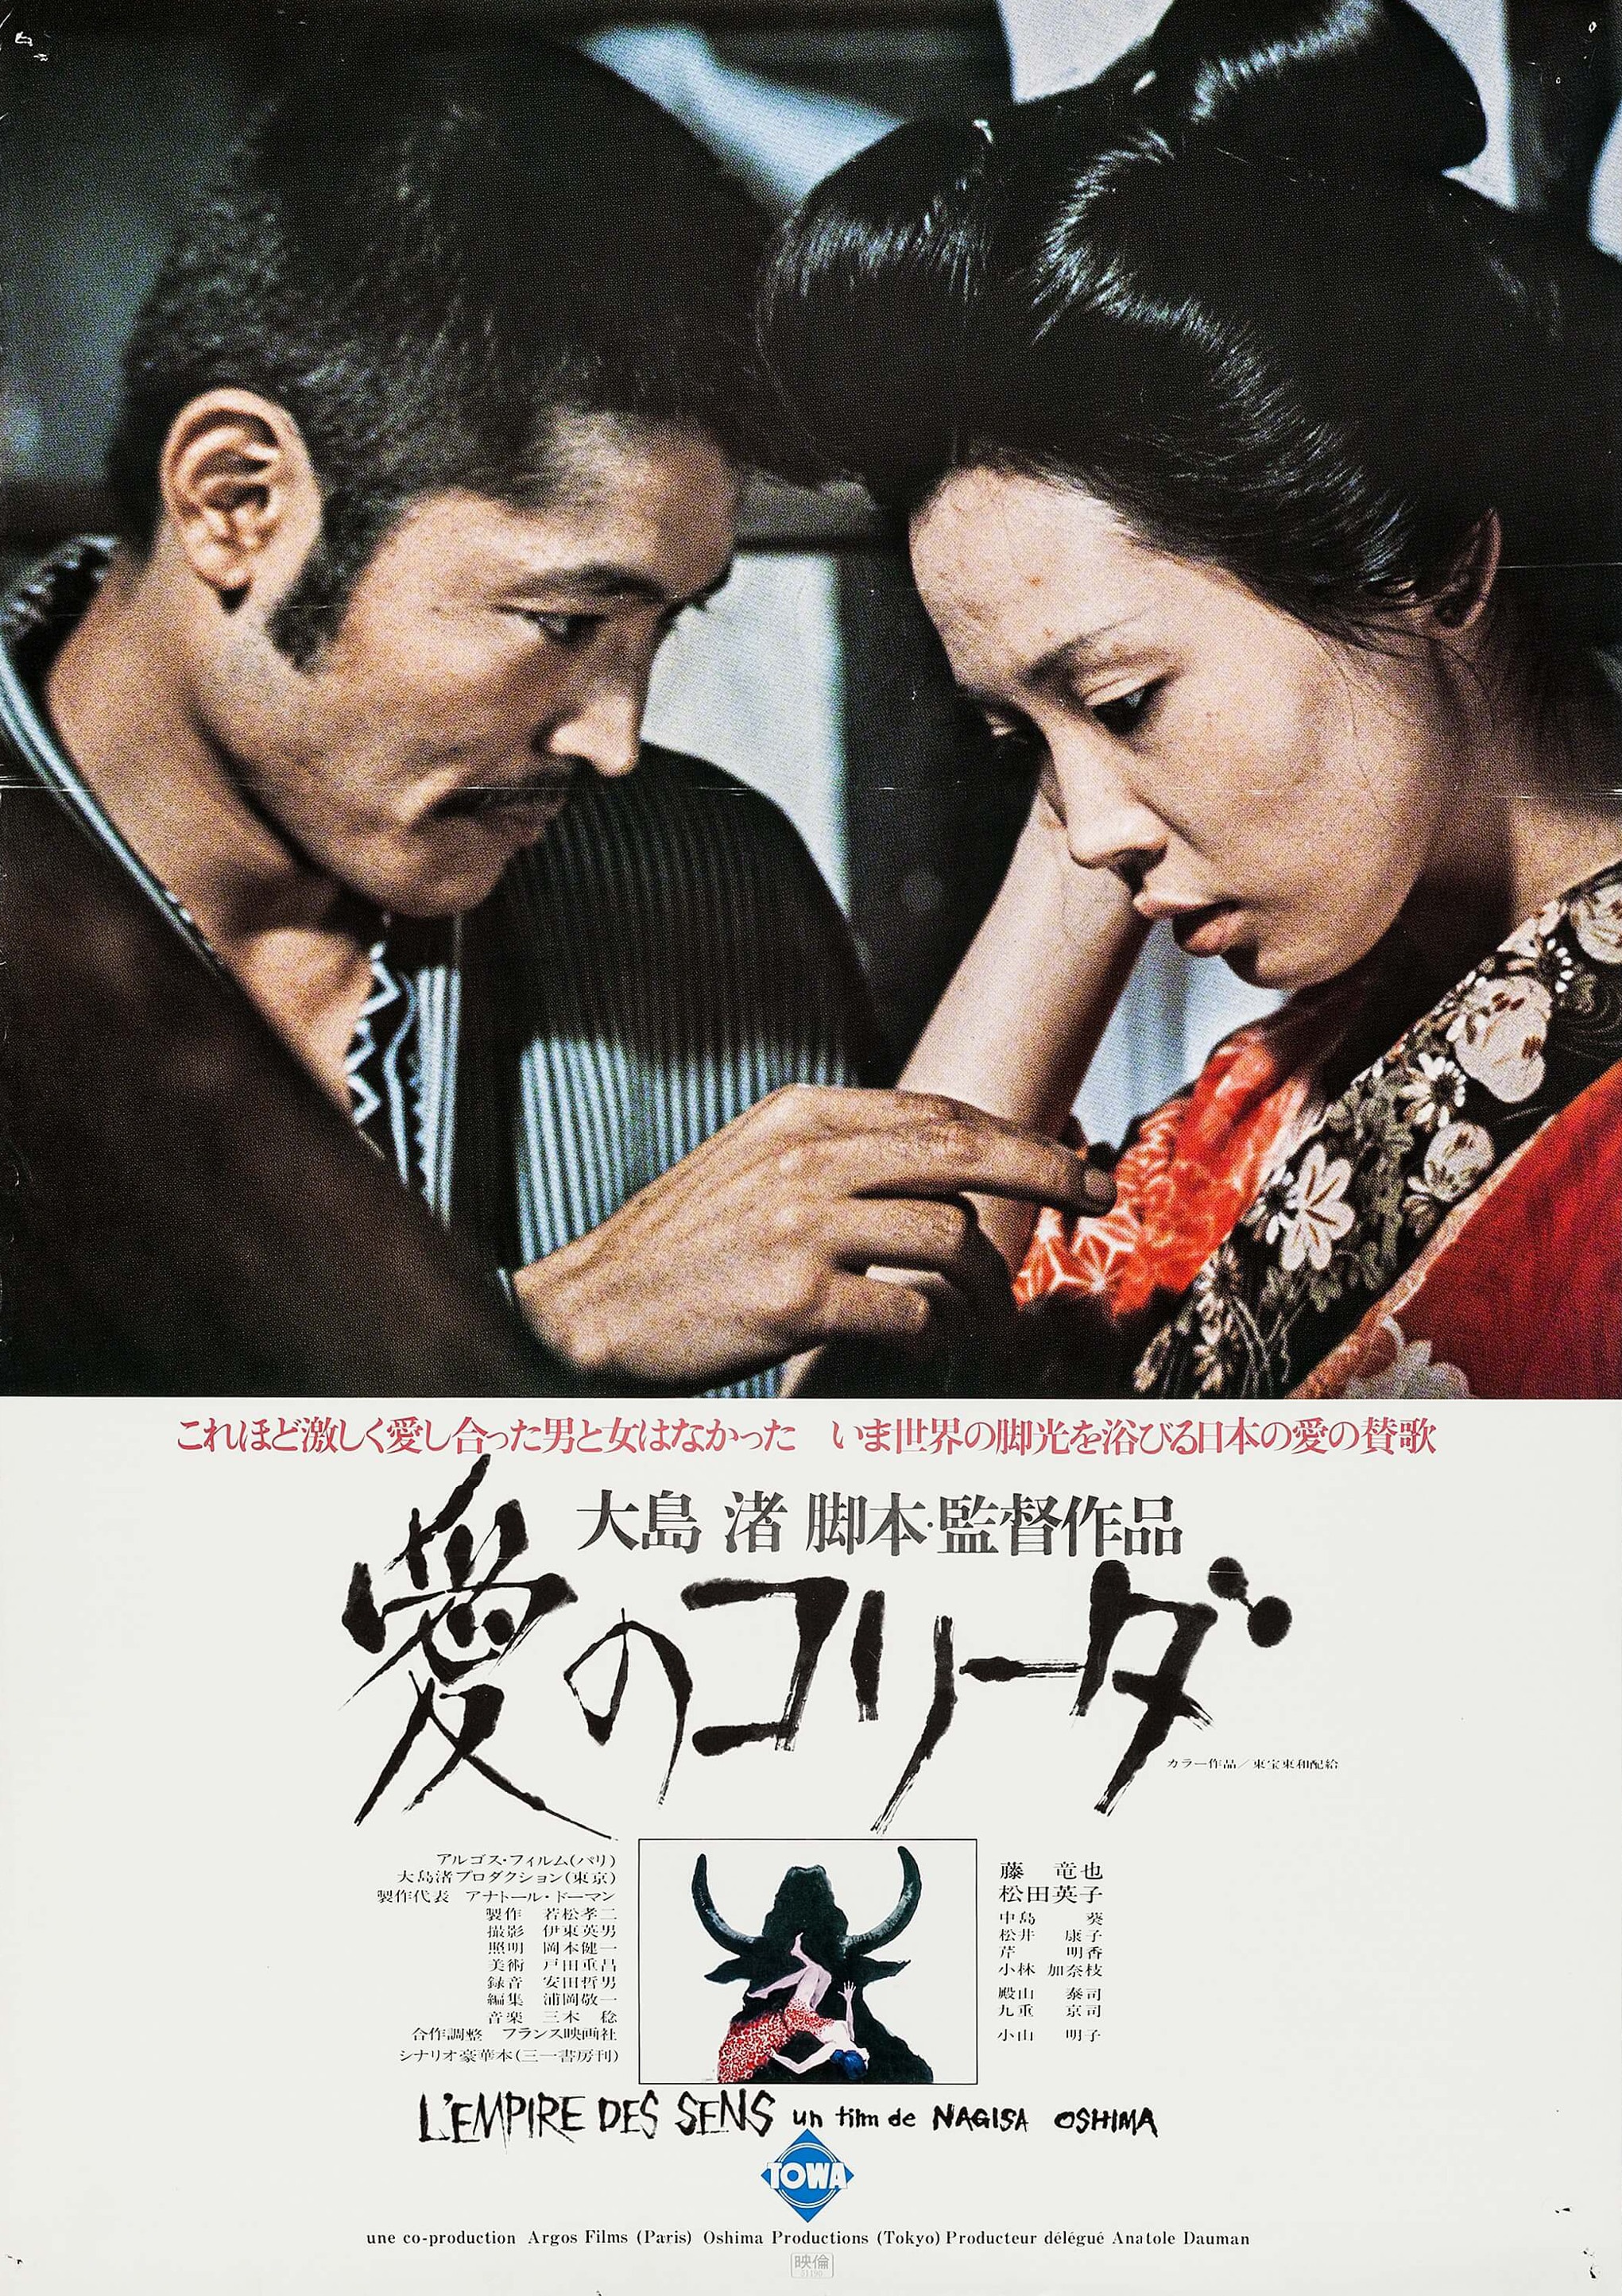 Mega Sized Movie Poster Image for Ai no korîda (#1 of 2)